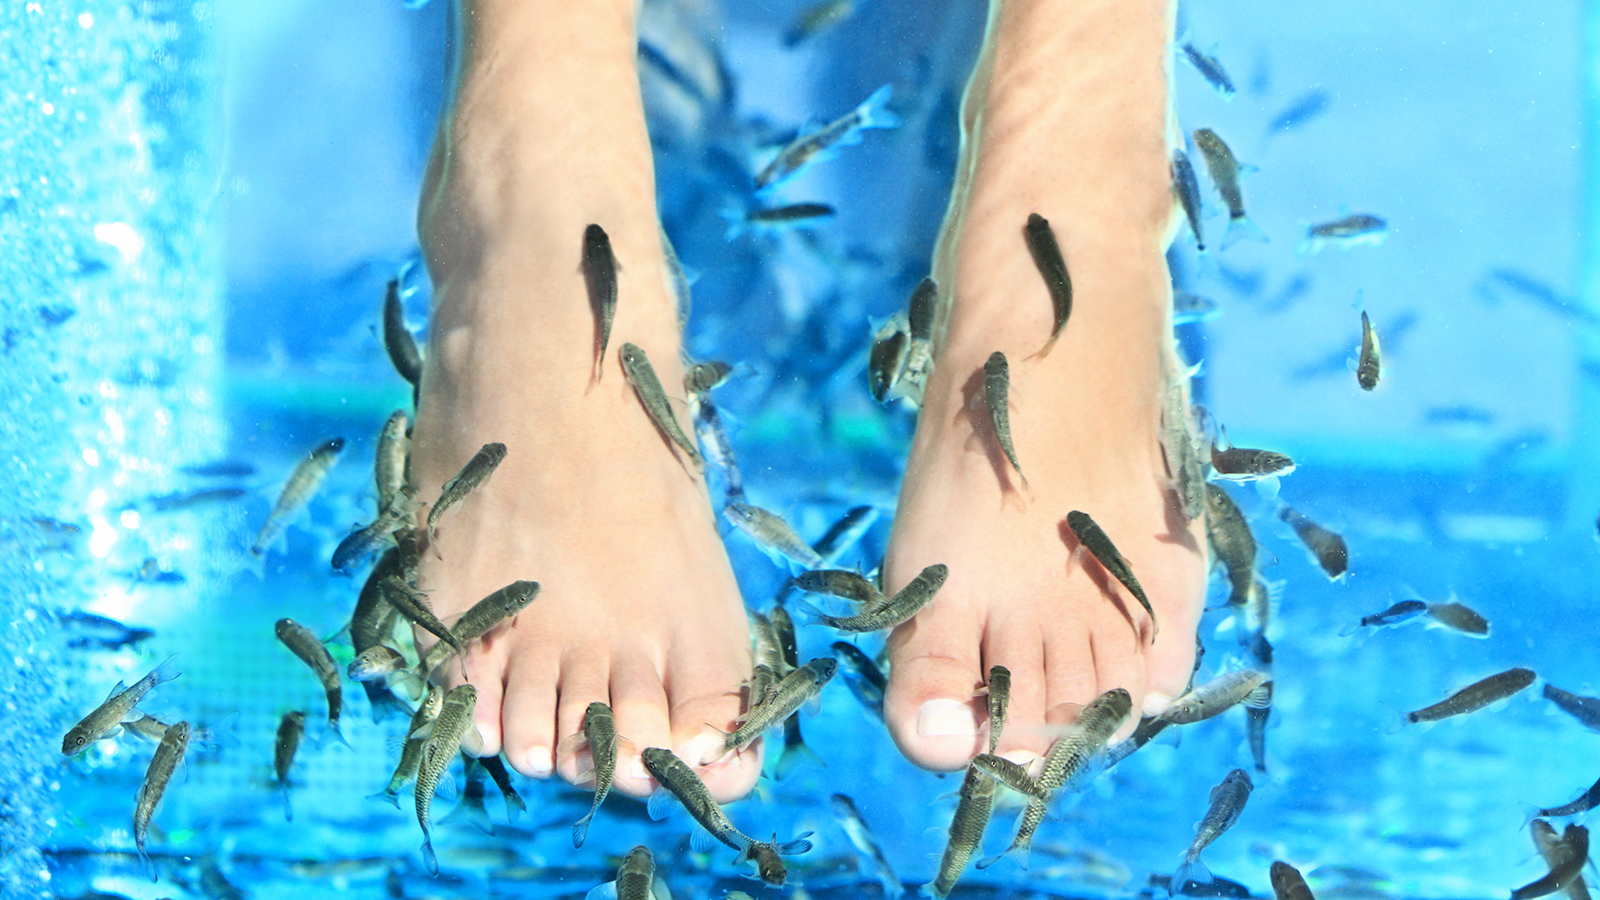 Fish Spa pedicure Rufa Garra treatment. Feet and fish in blue water. Woman feet.